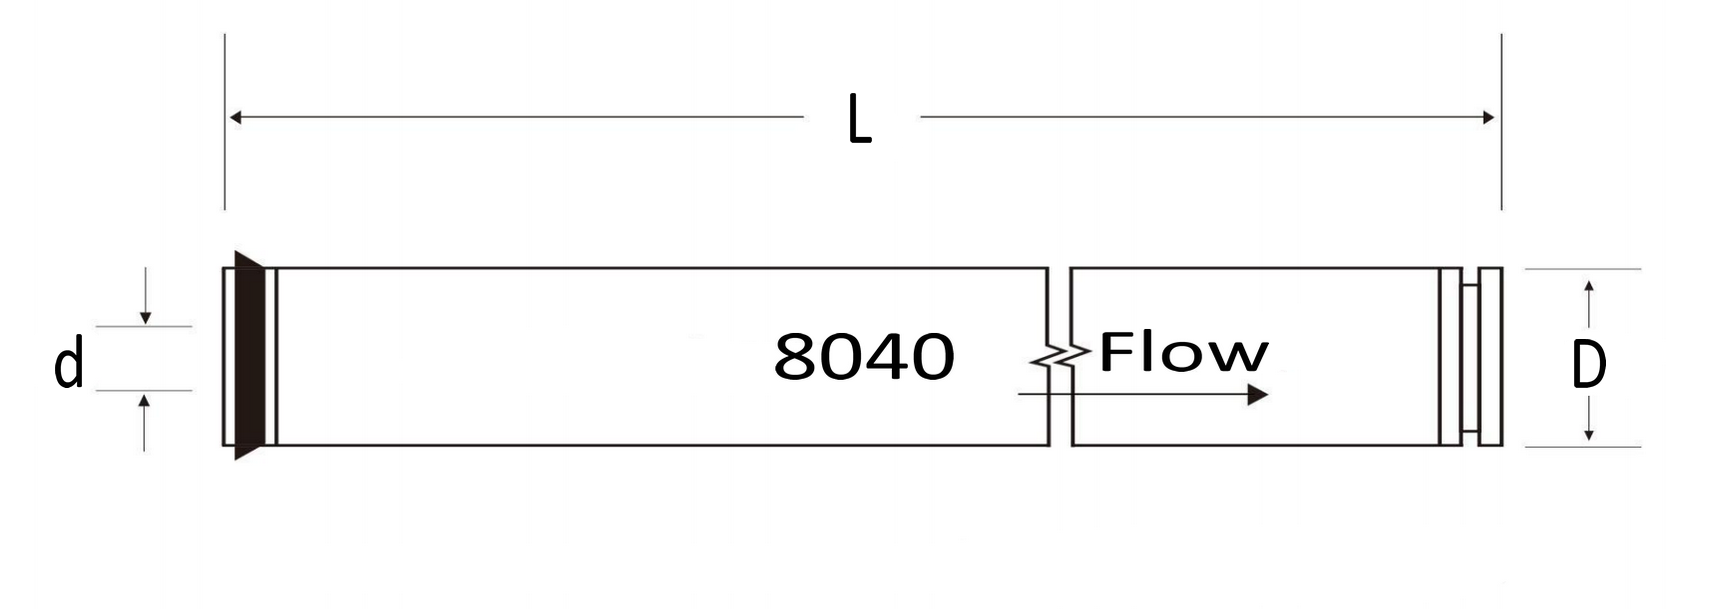 LG BW 400 ES Equivalent RO Membrane Element Dimensions